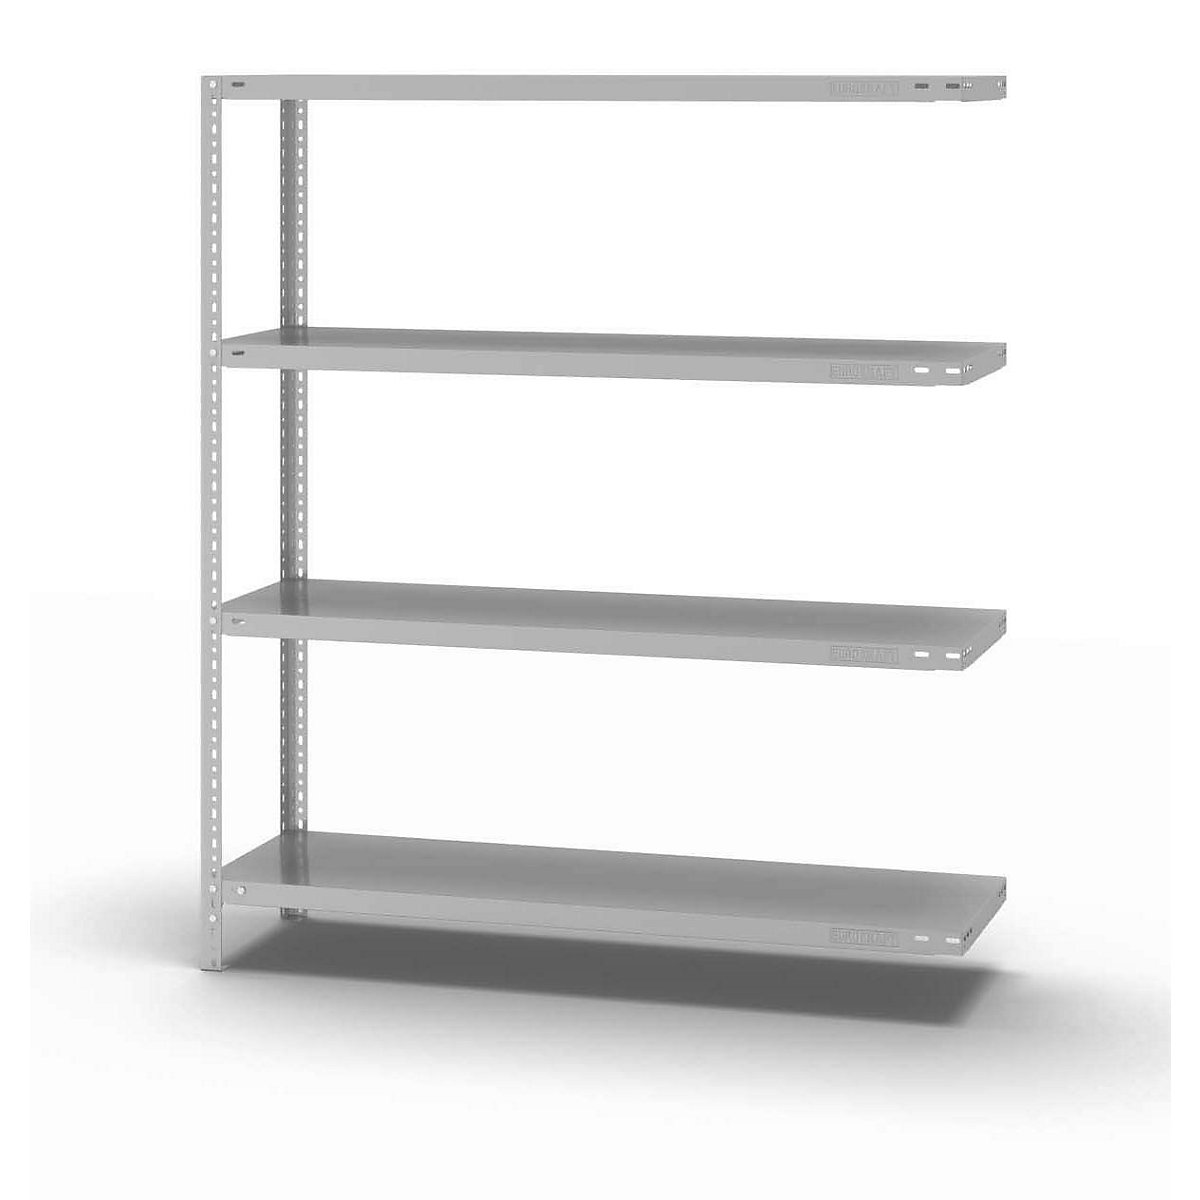 Bolt-together shelf unit, light duty, plastic coated – eurokraft pro, shelf unit height 1500 mm, shelf width 1300 mm, depth 400 mm, extension shelf unit-8